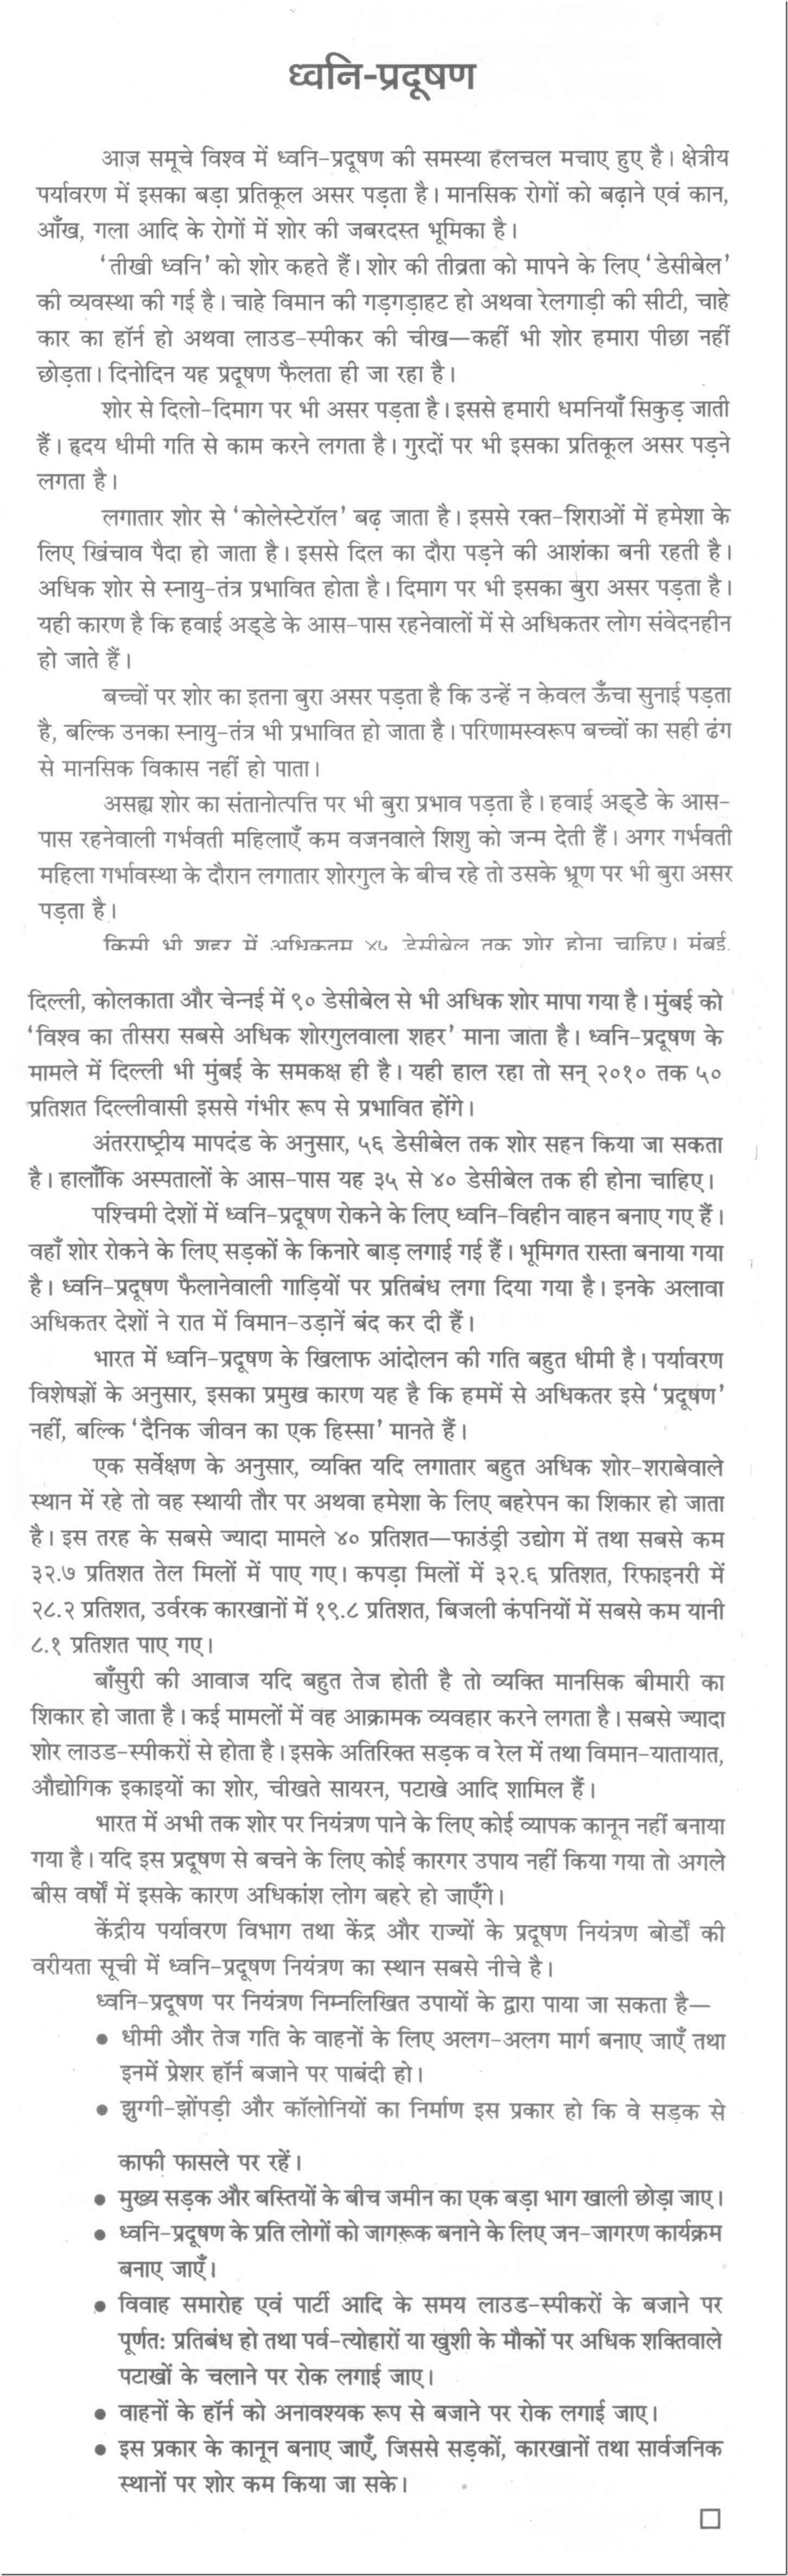 Essay on pollution in hindi language wikipedia